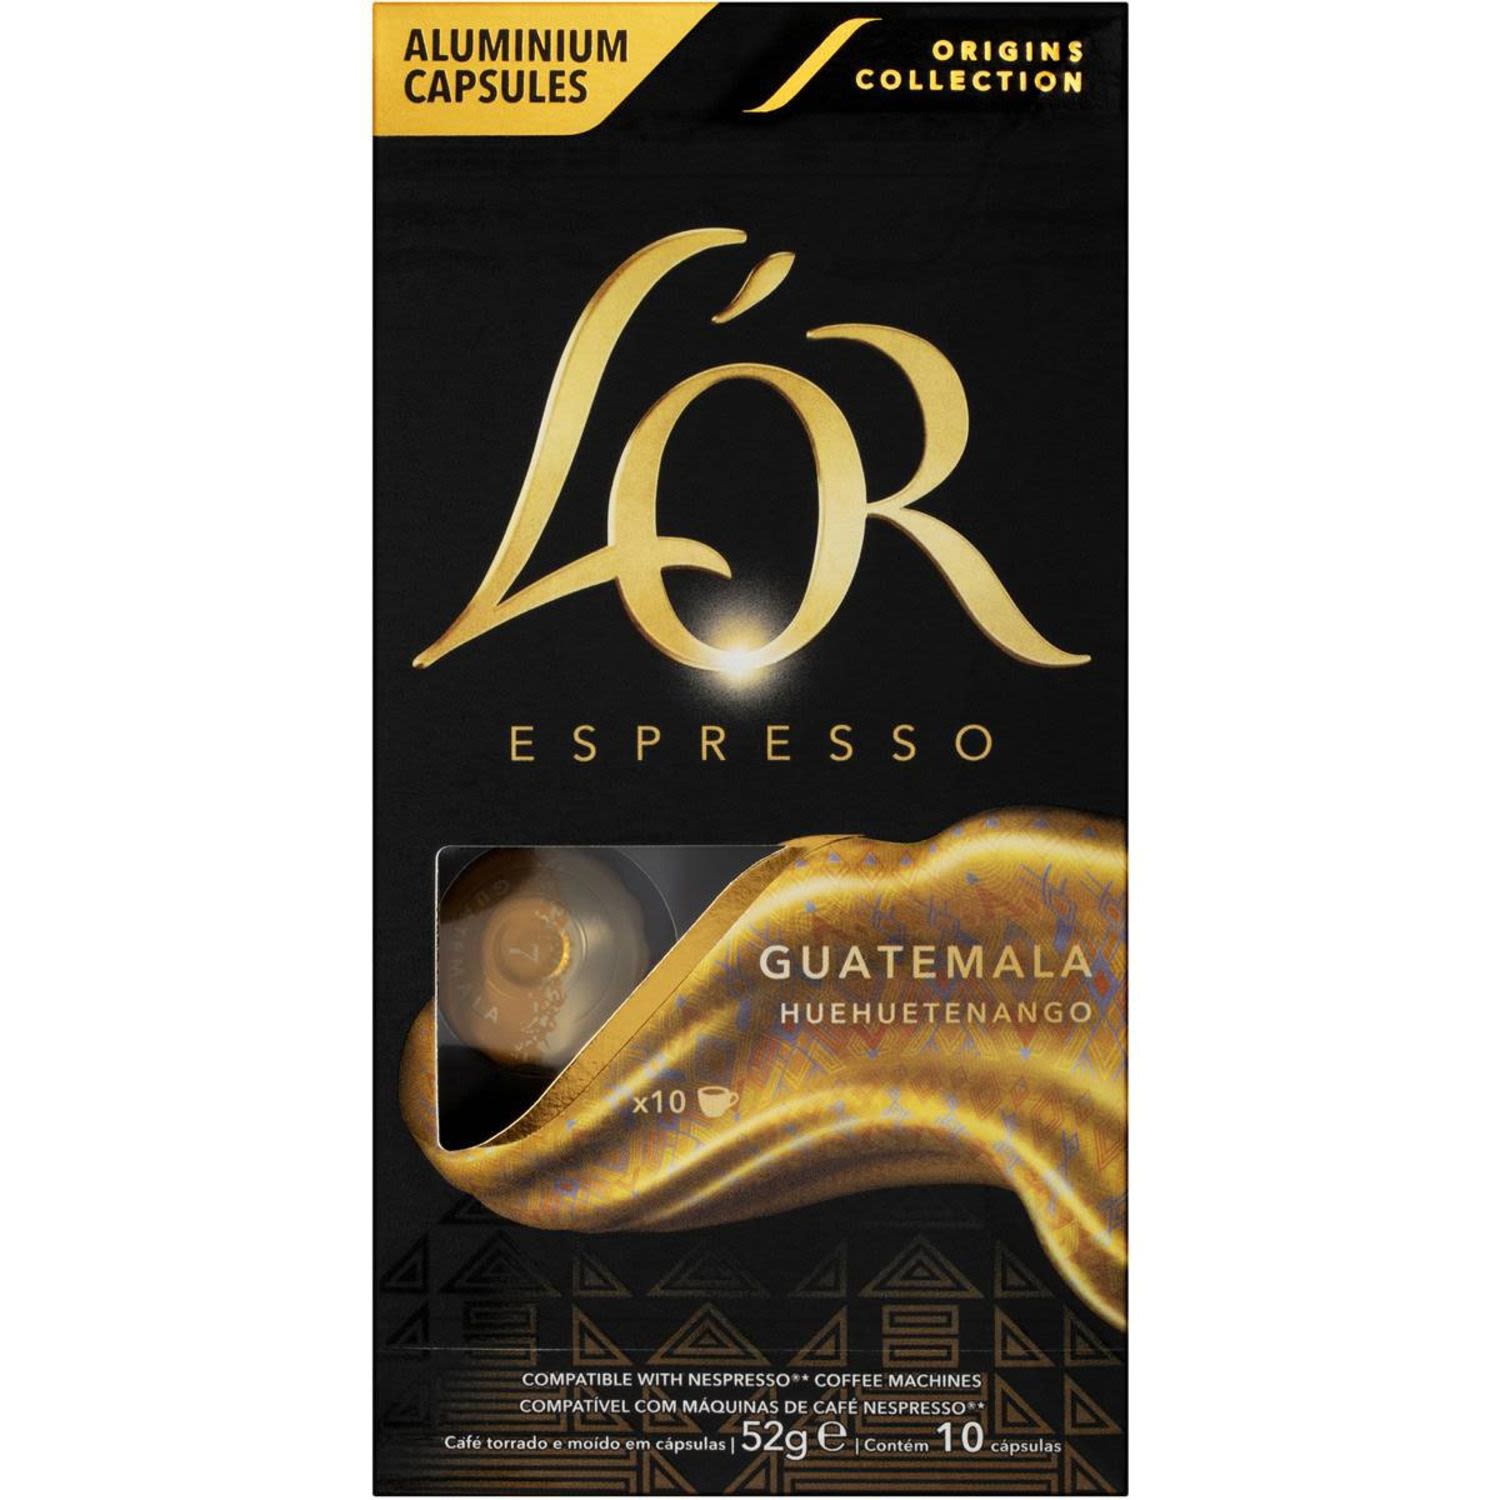 L'OR Espresso Guatemala Huehuetenango Coffee Capsules, 10 Each